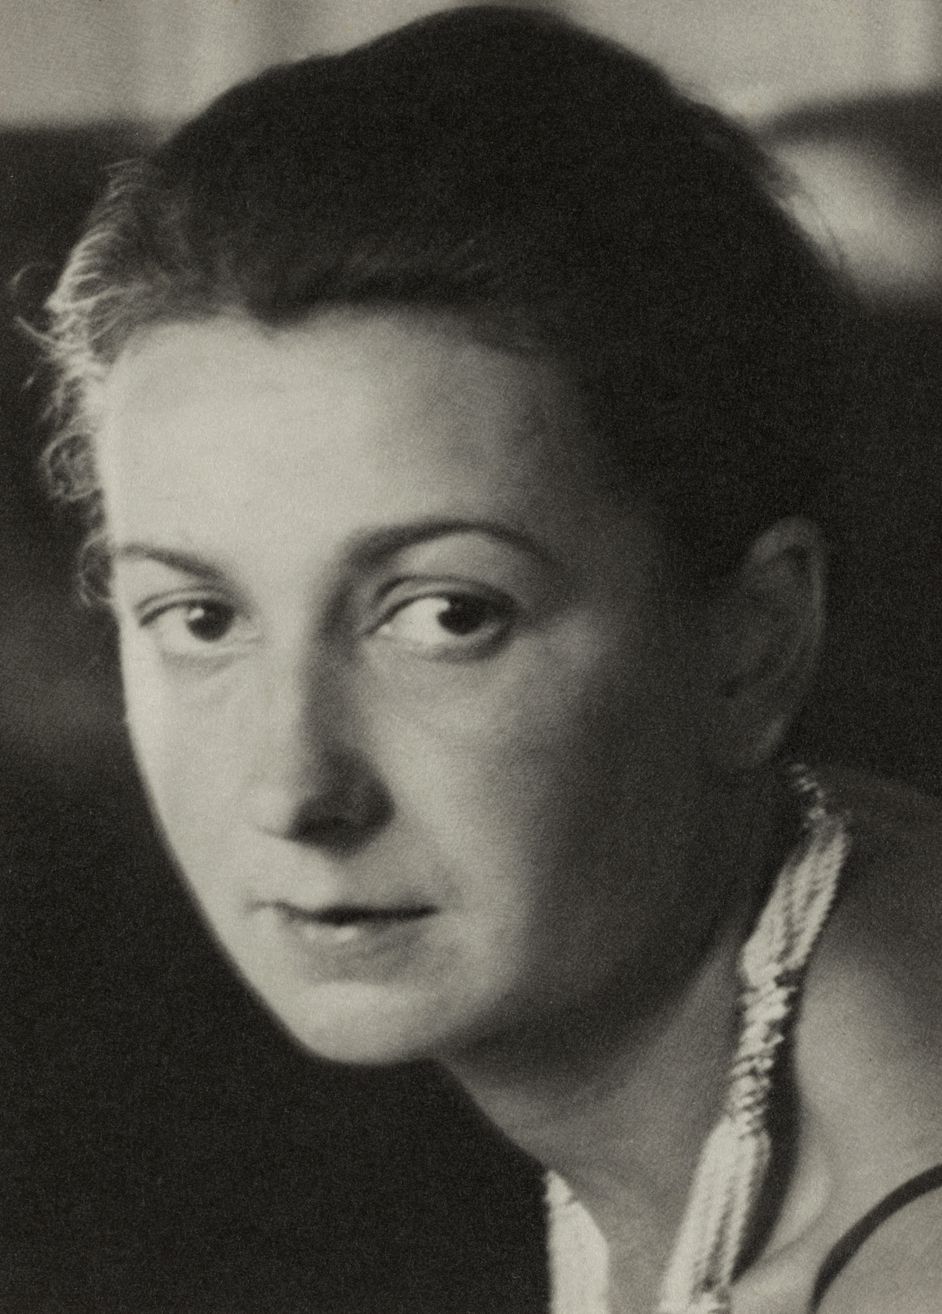 Photographer unknown, Portrait of Ruth Hildegard Geyer-Raack, c. 1930 